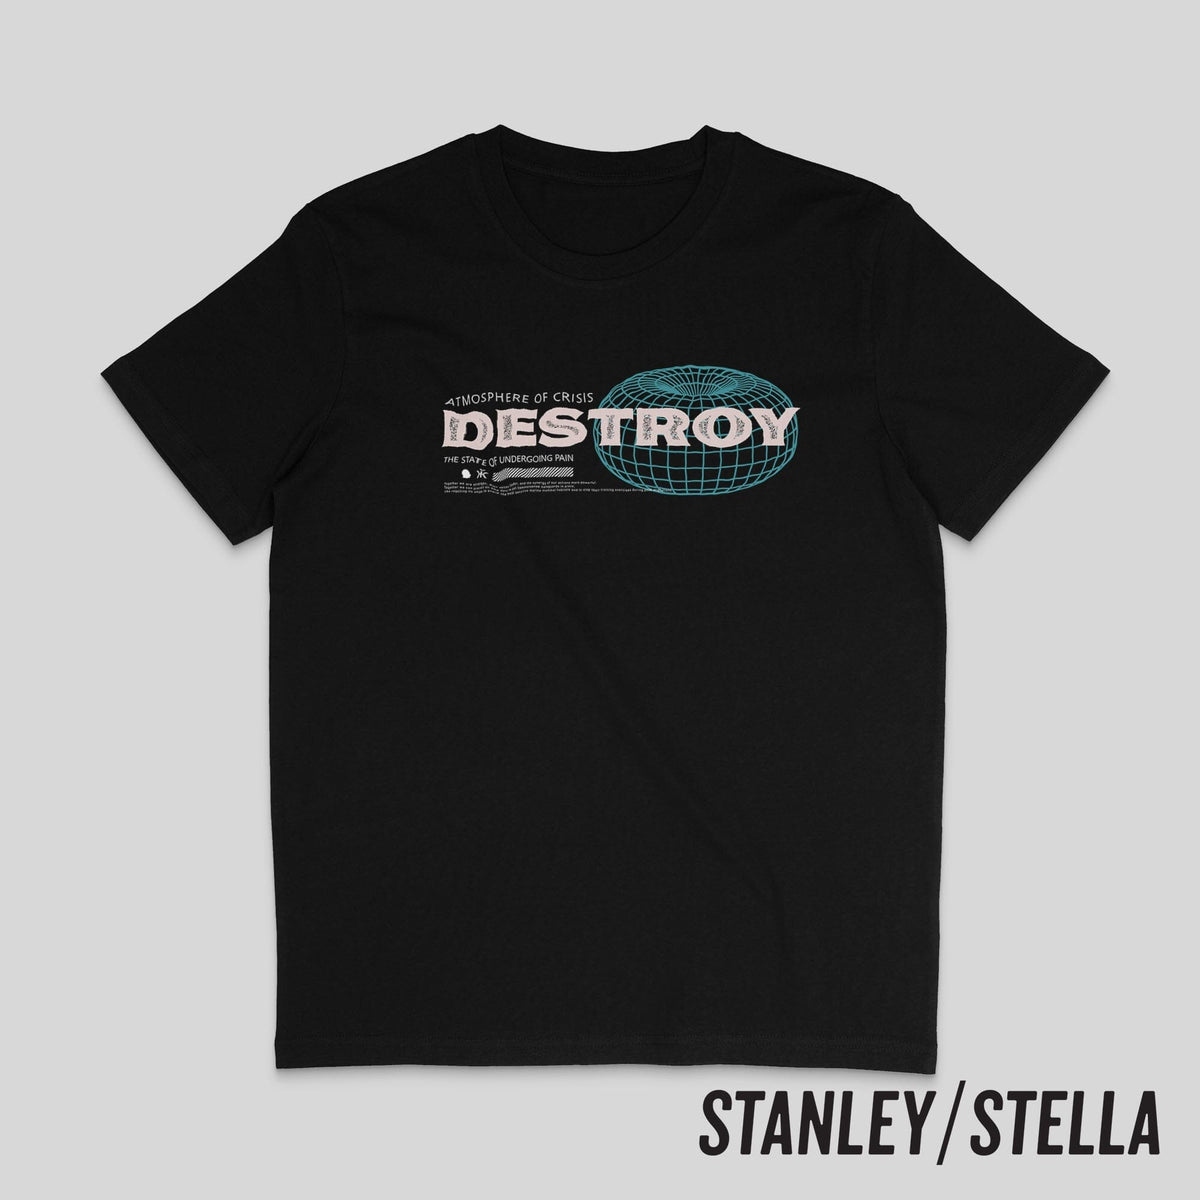 Stanley/Stella T-Shirts - Your Design - Custom Printed